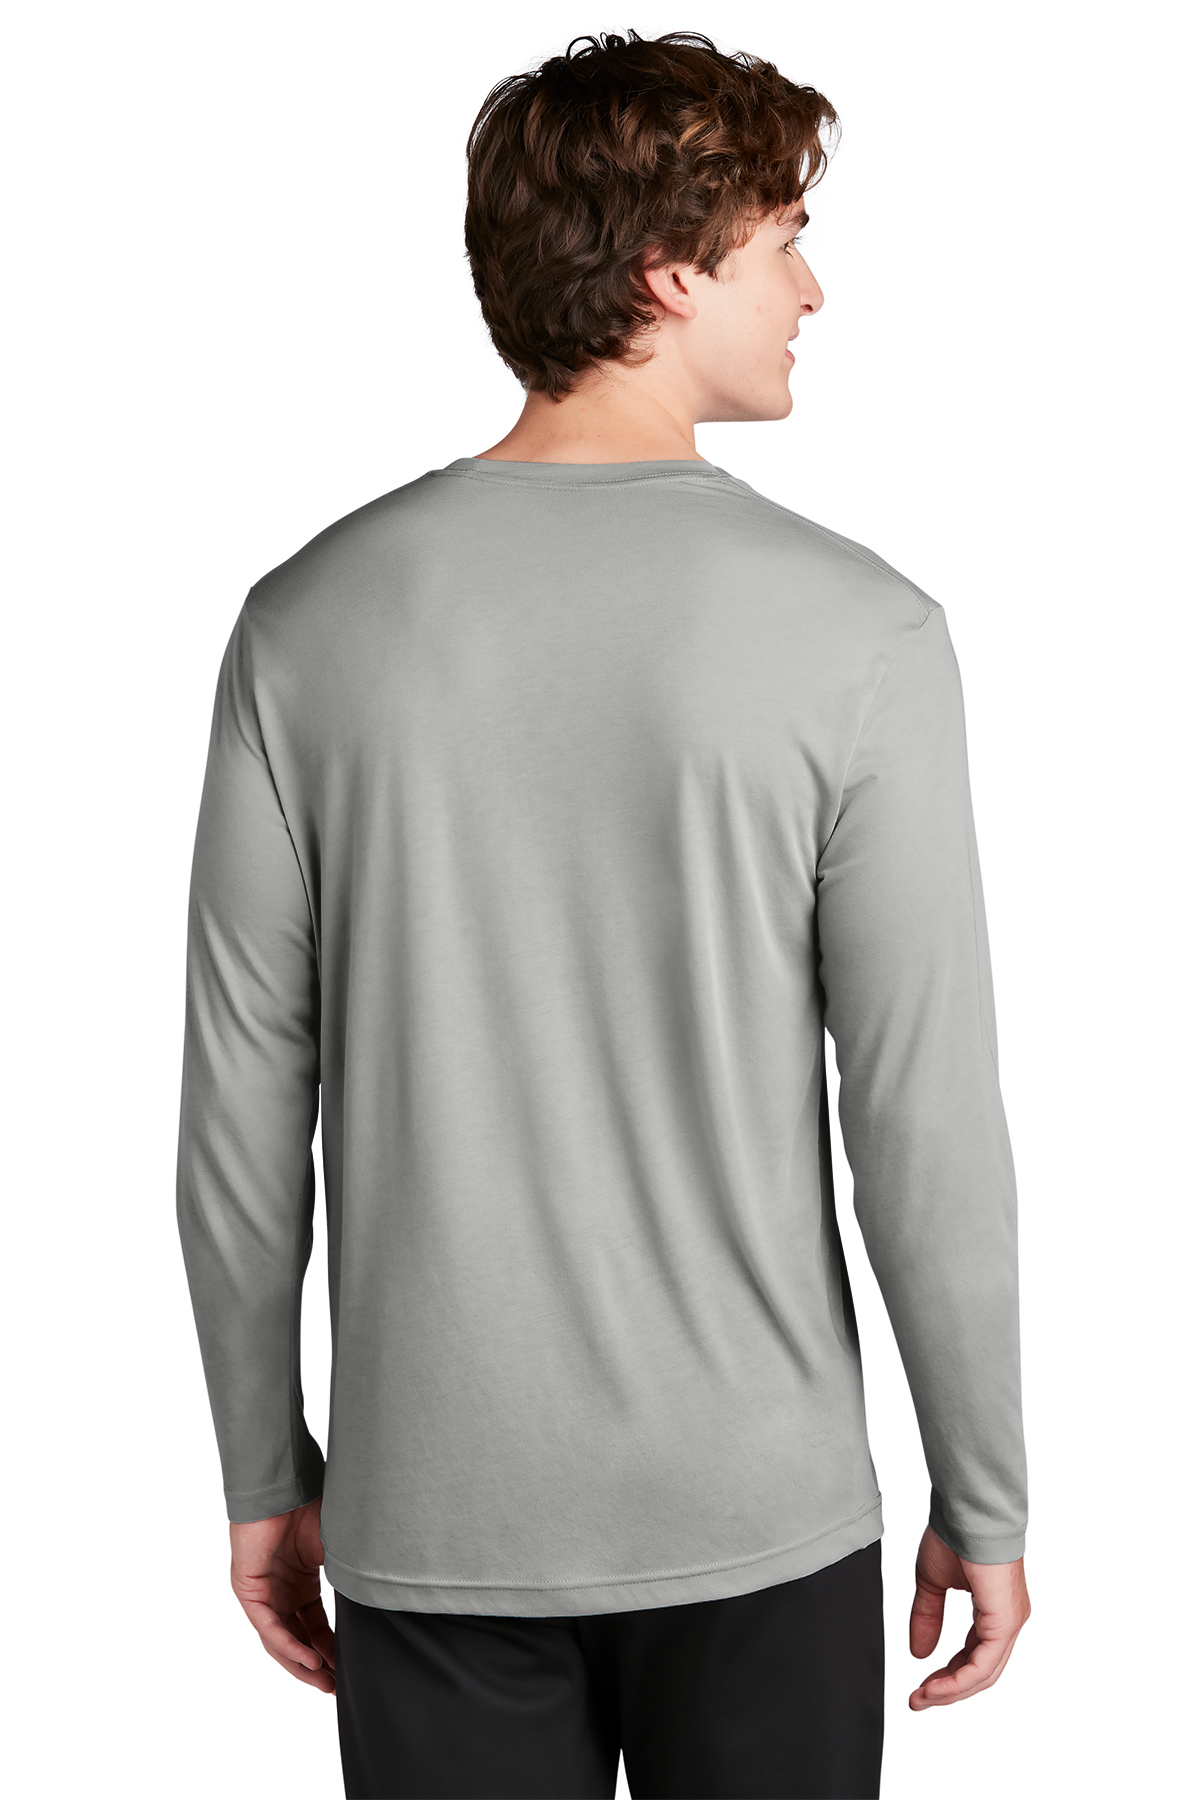 Trimark 17888 Parima Long Sleeve Tech T-Shirt